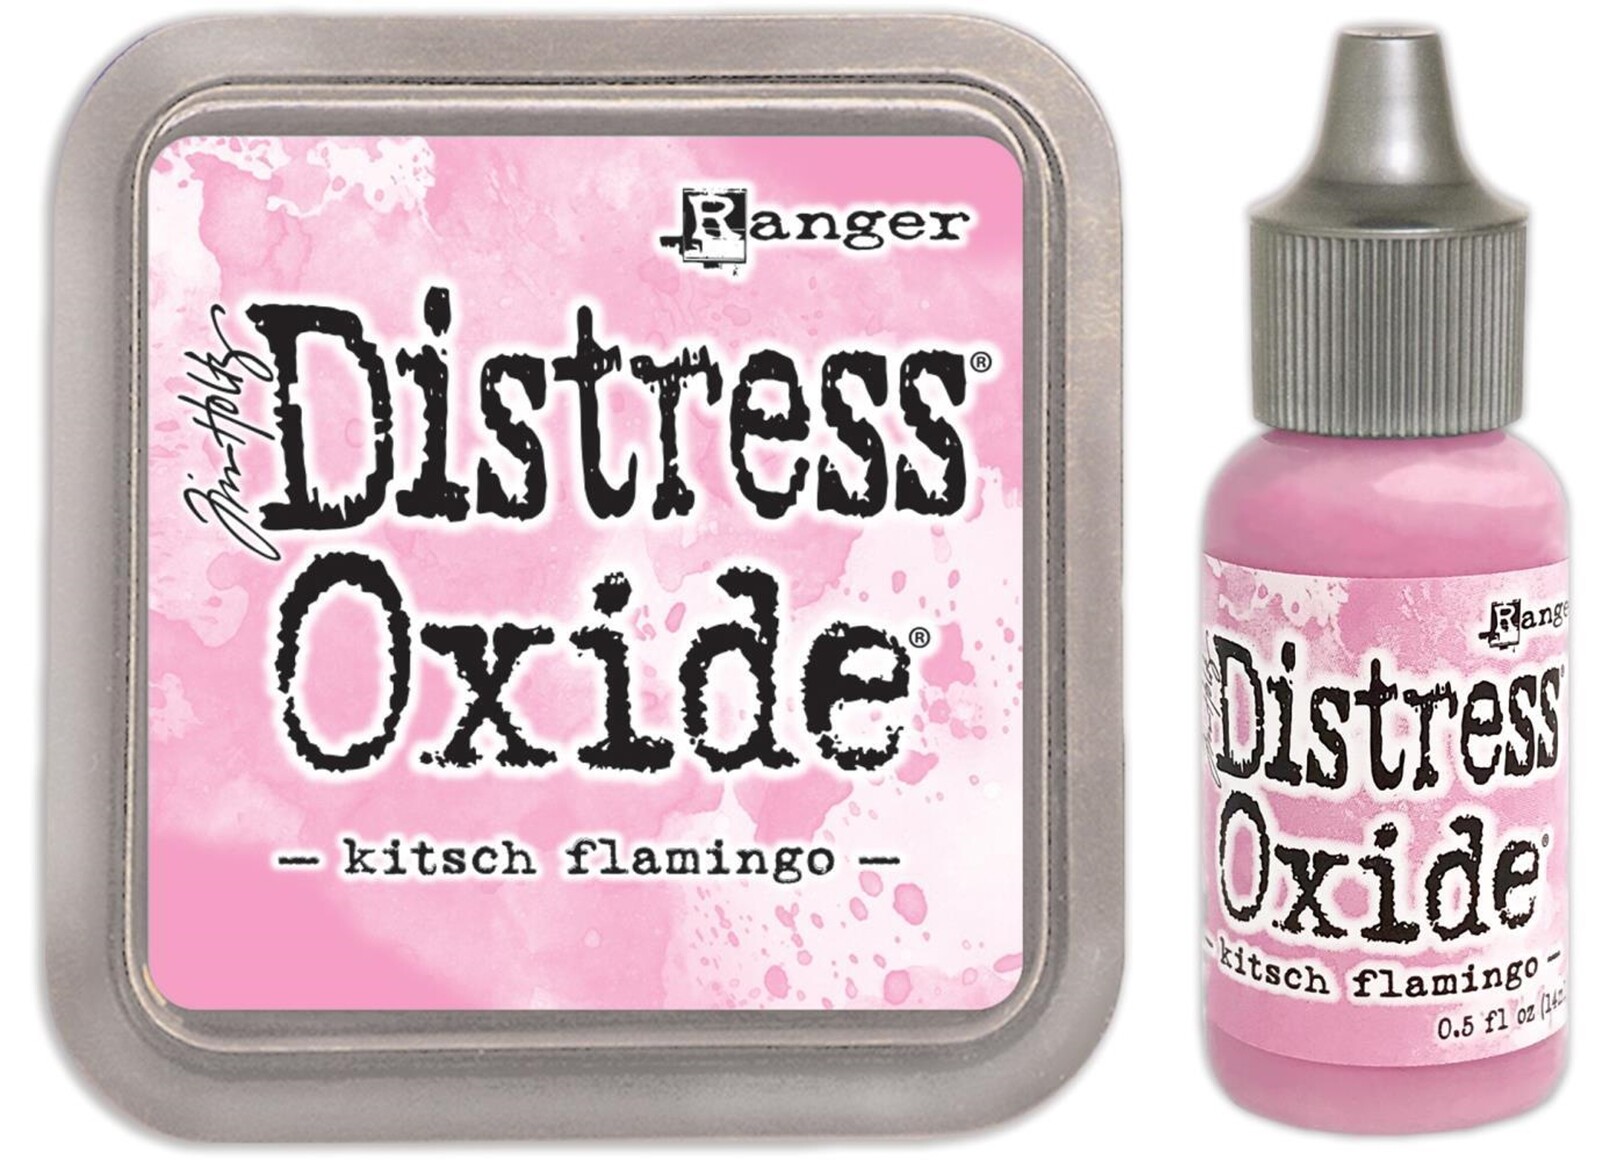 Tim Holtz Distress Oxide Ink Pad + Reinker Kitsch Flamingo